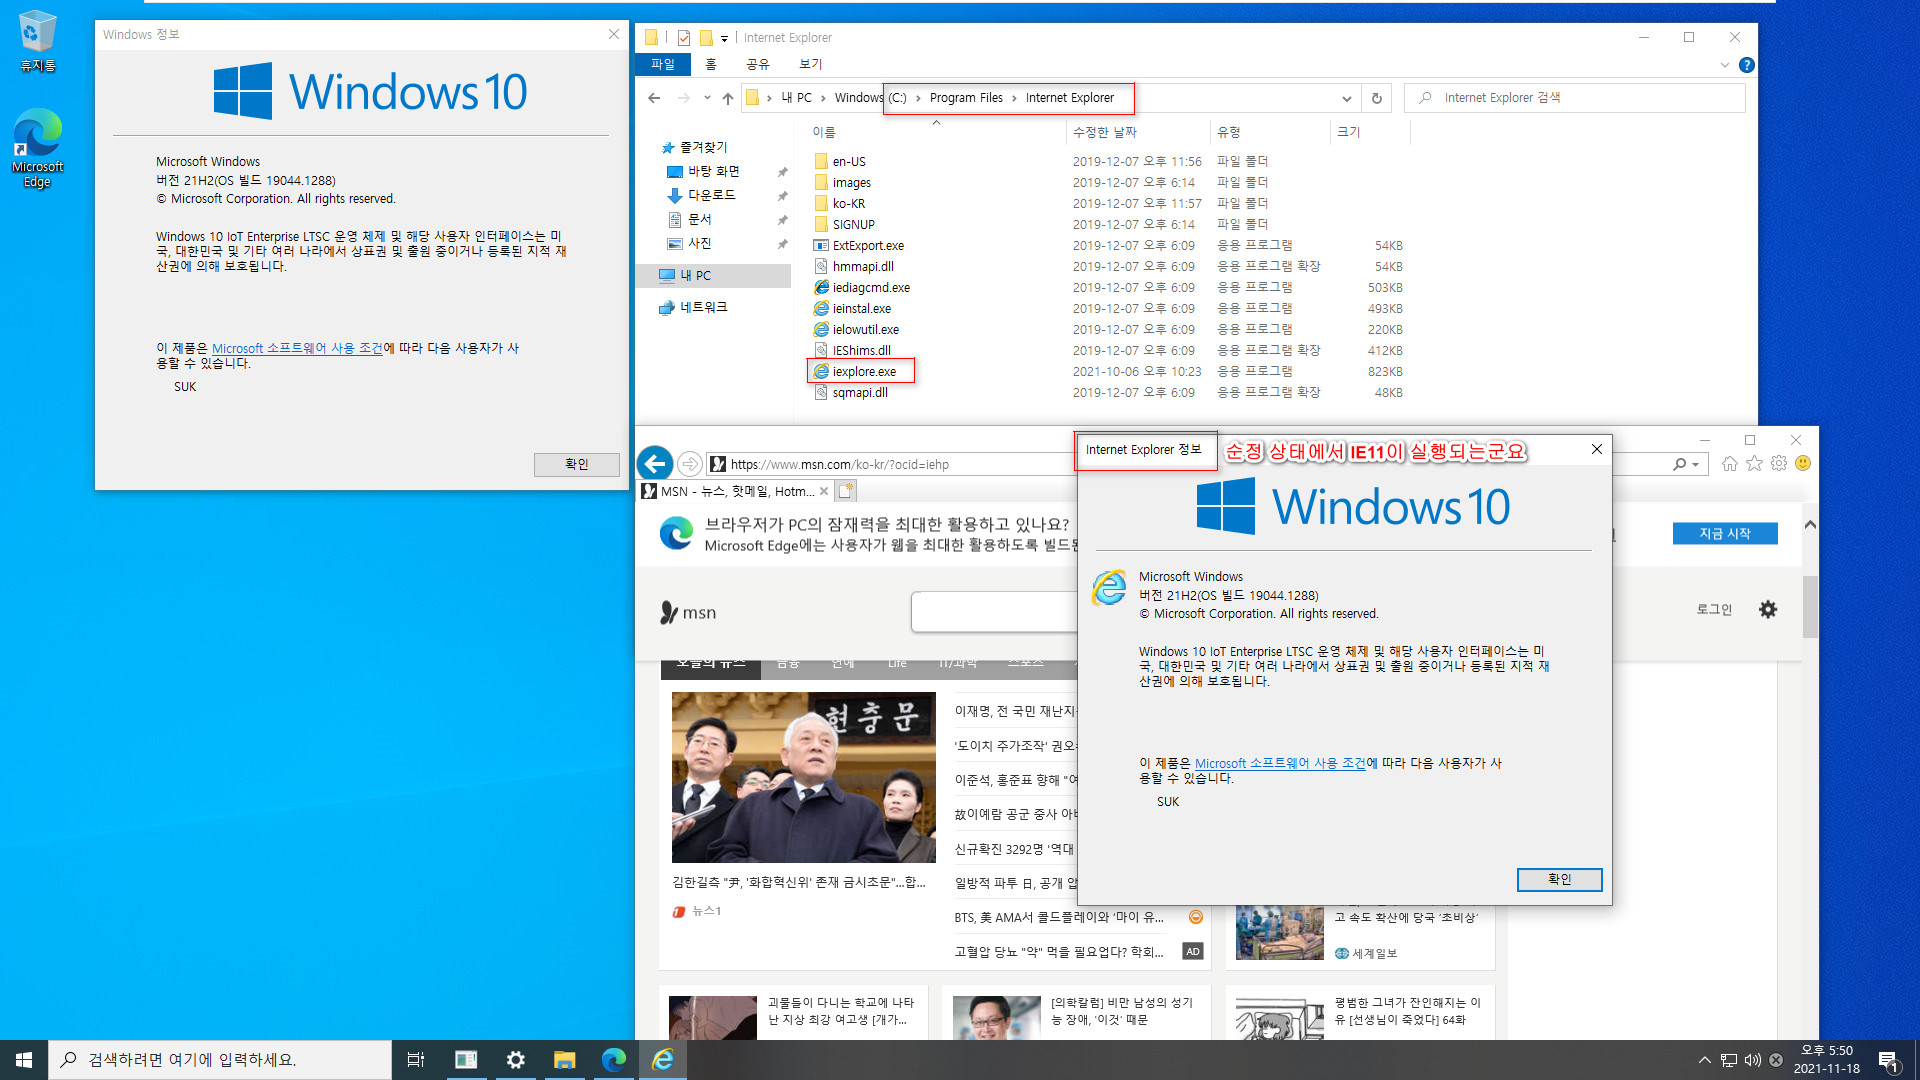 windows_10_iot_enterprise_ltsc_2021 만들기 후 윈도우 설치 테스트 2021-11-18_175018.jpg